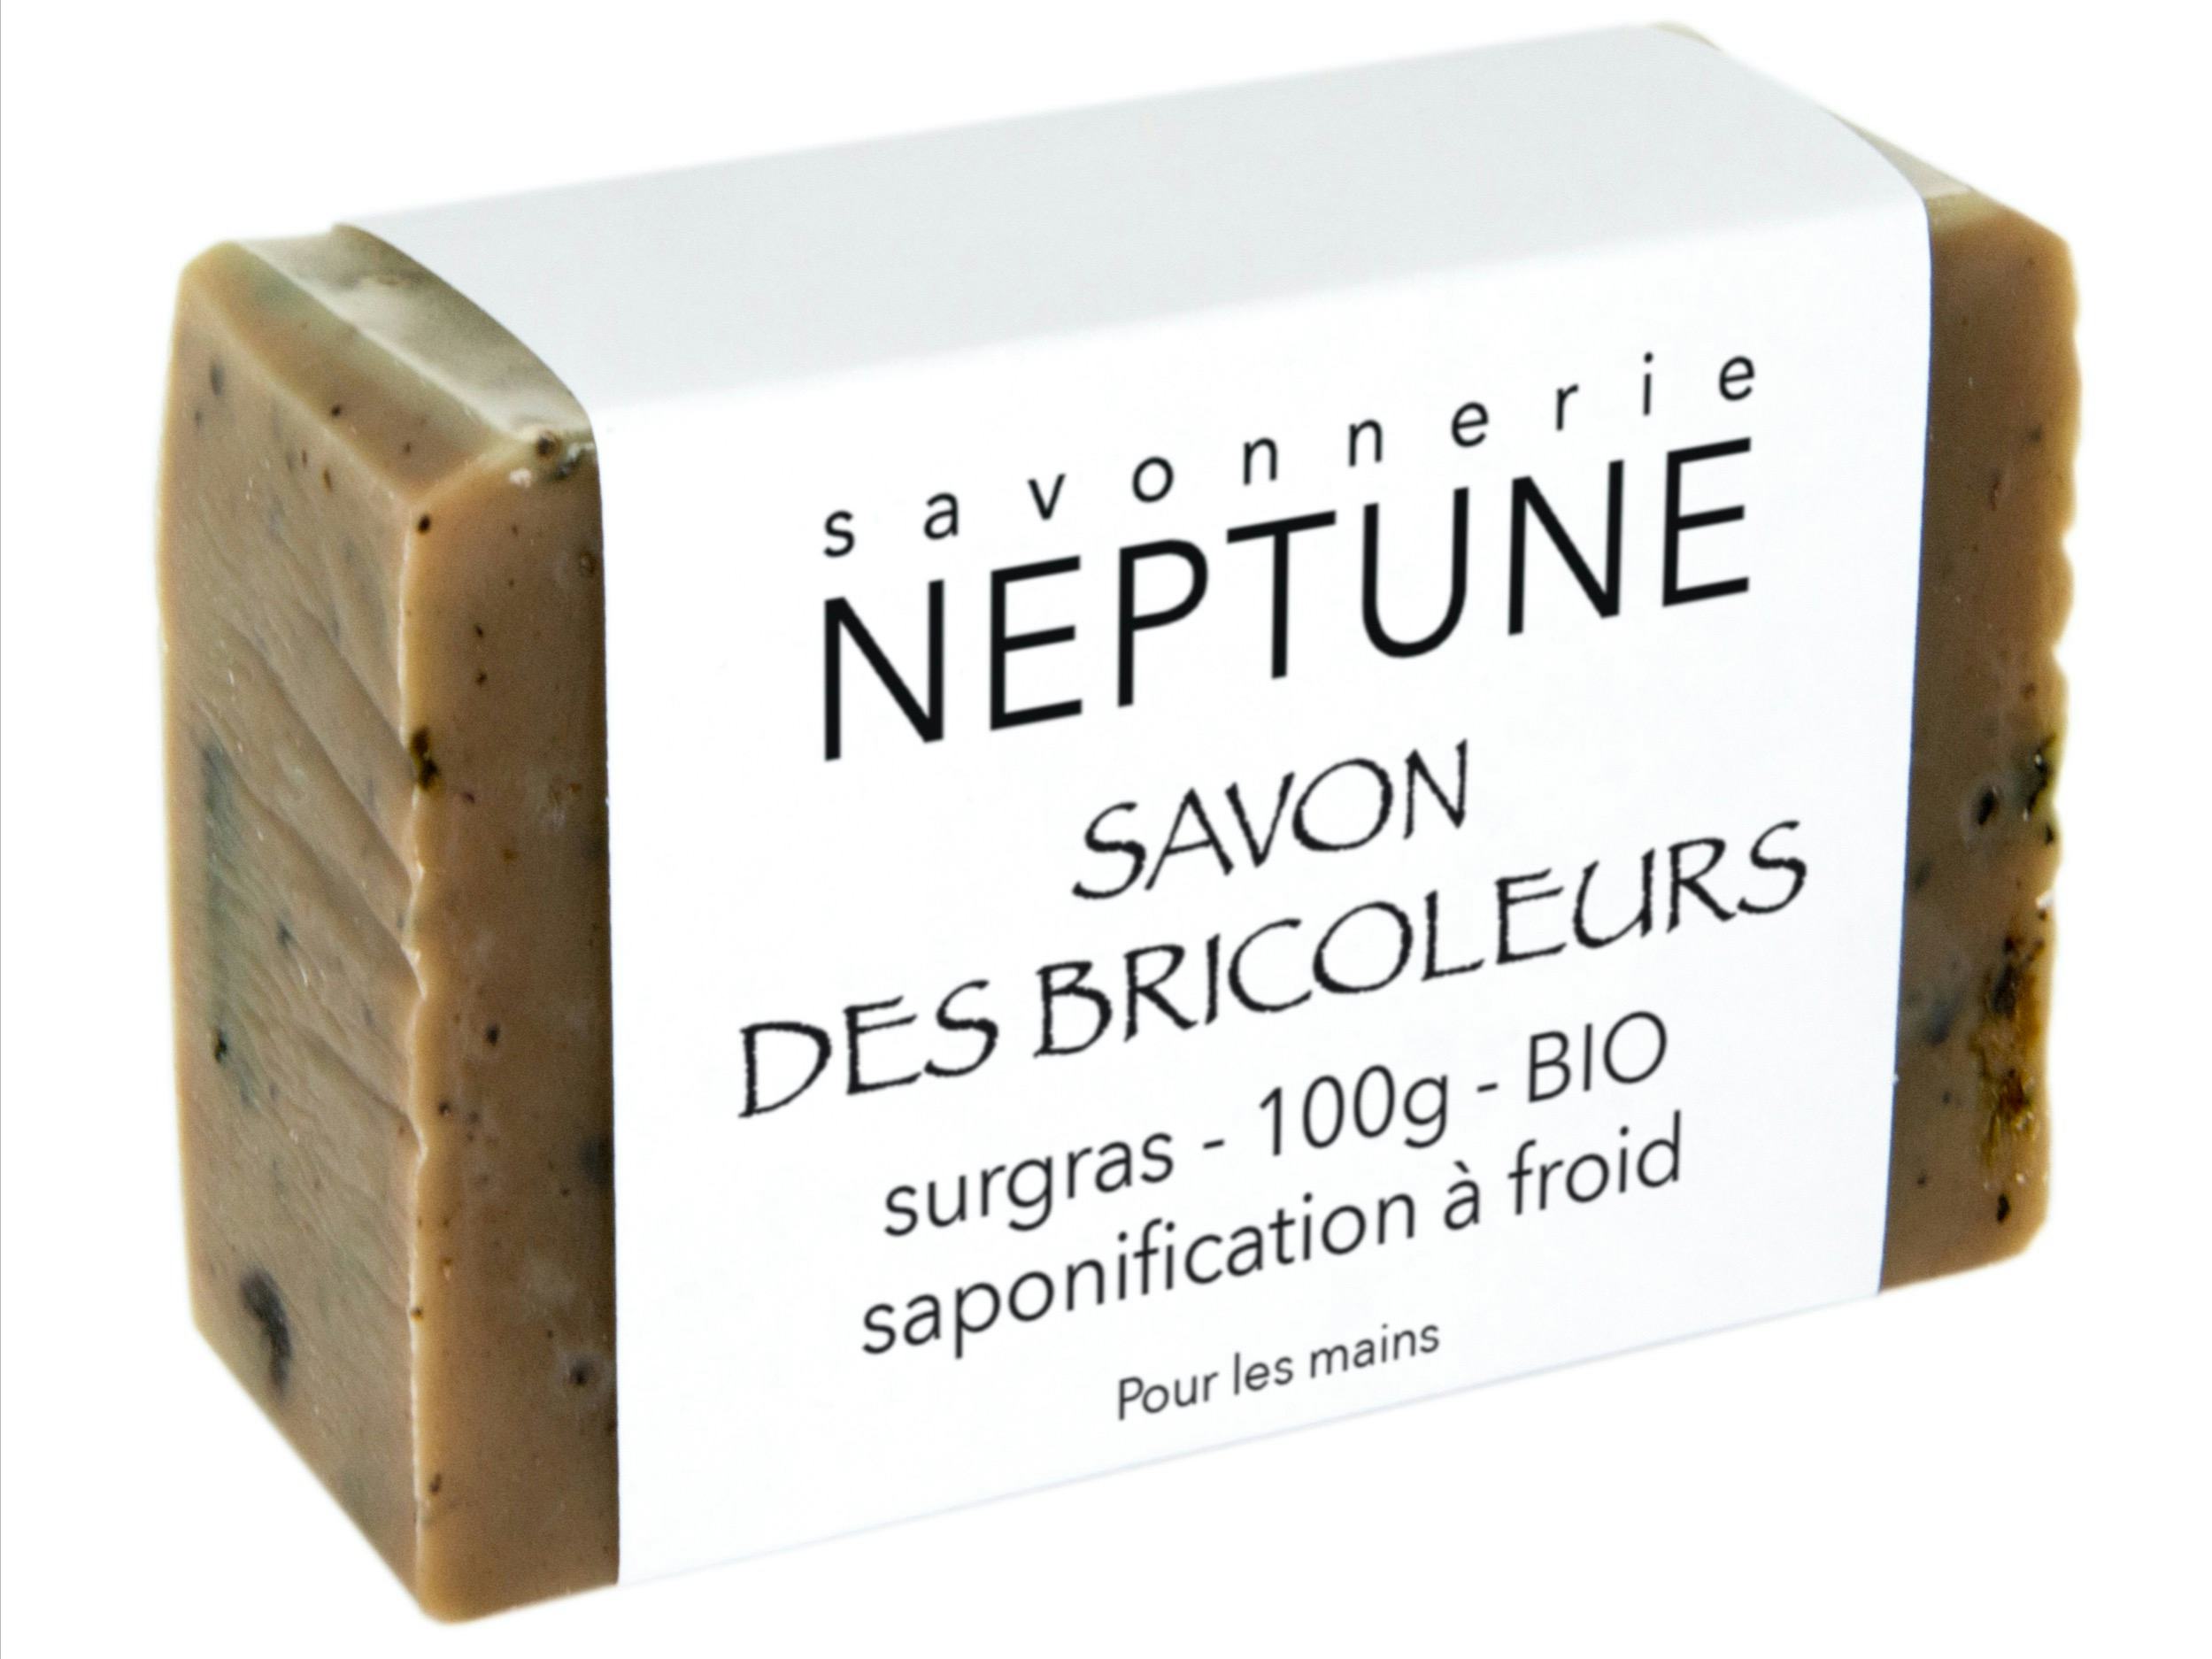 Handyman soap - organic, Savonnerie NEPTUNE, Crésuz, image 2 | Mimelis